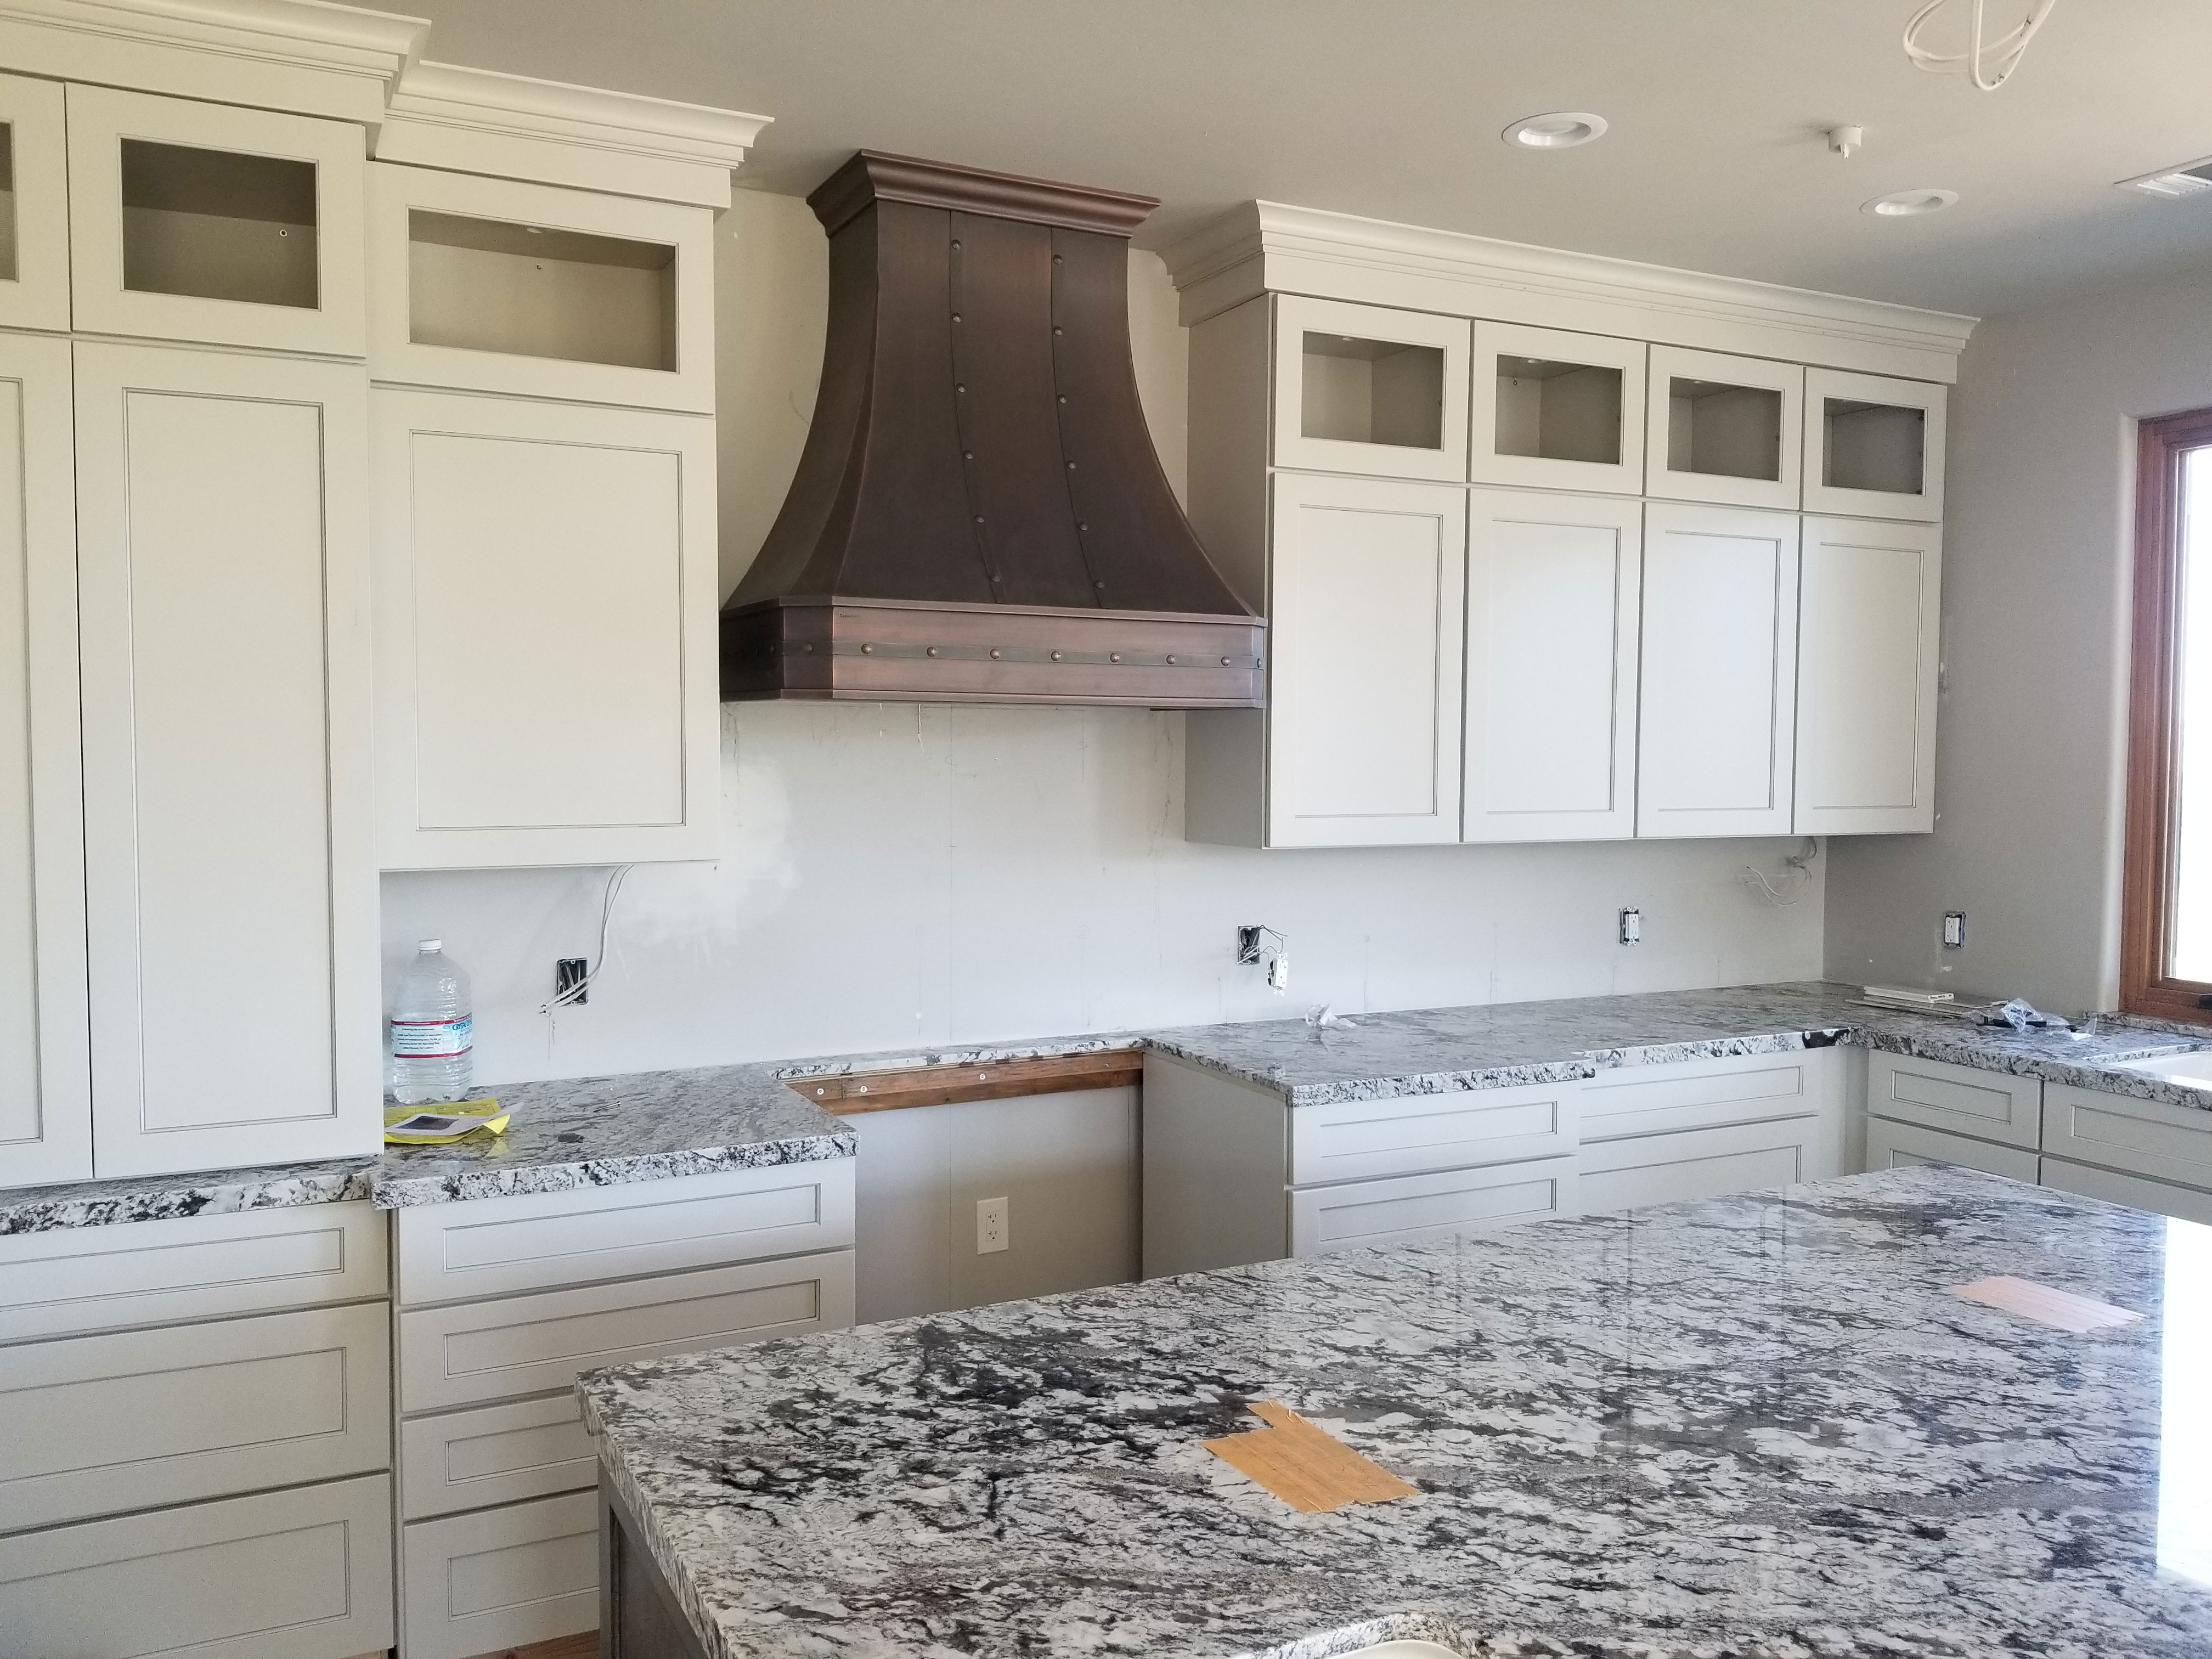 Exquisite kitchen design with range hood, white kitchen cabinets,marble kitchen countertops,captivating marble backsplash